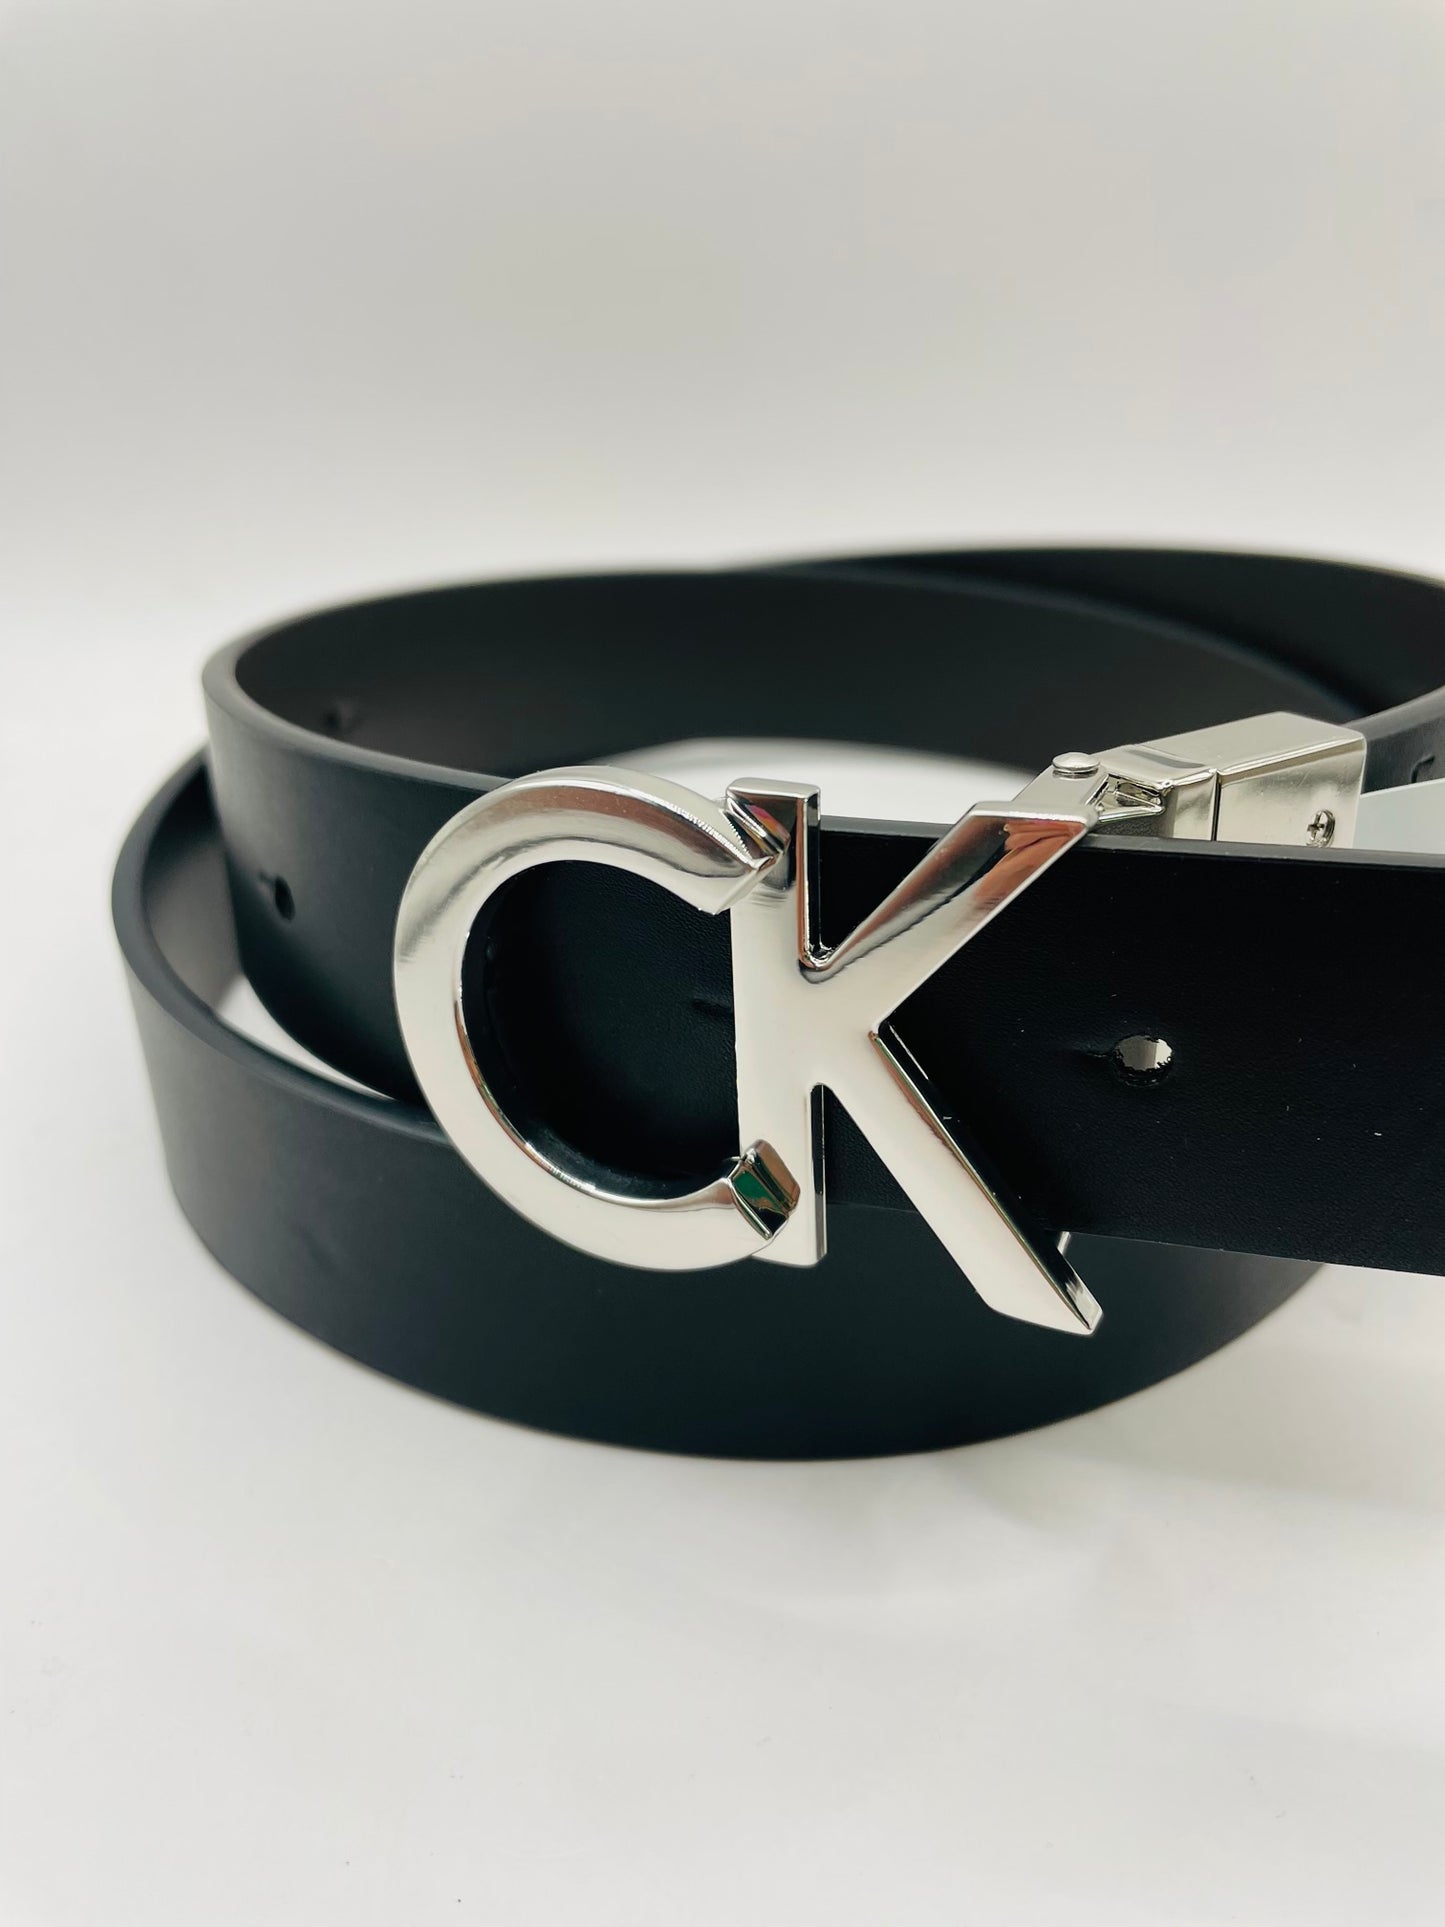 Calvin Klein reversible belt black & dark brown